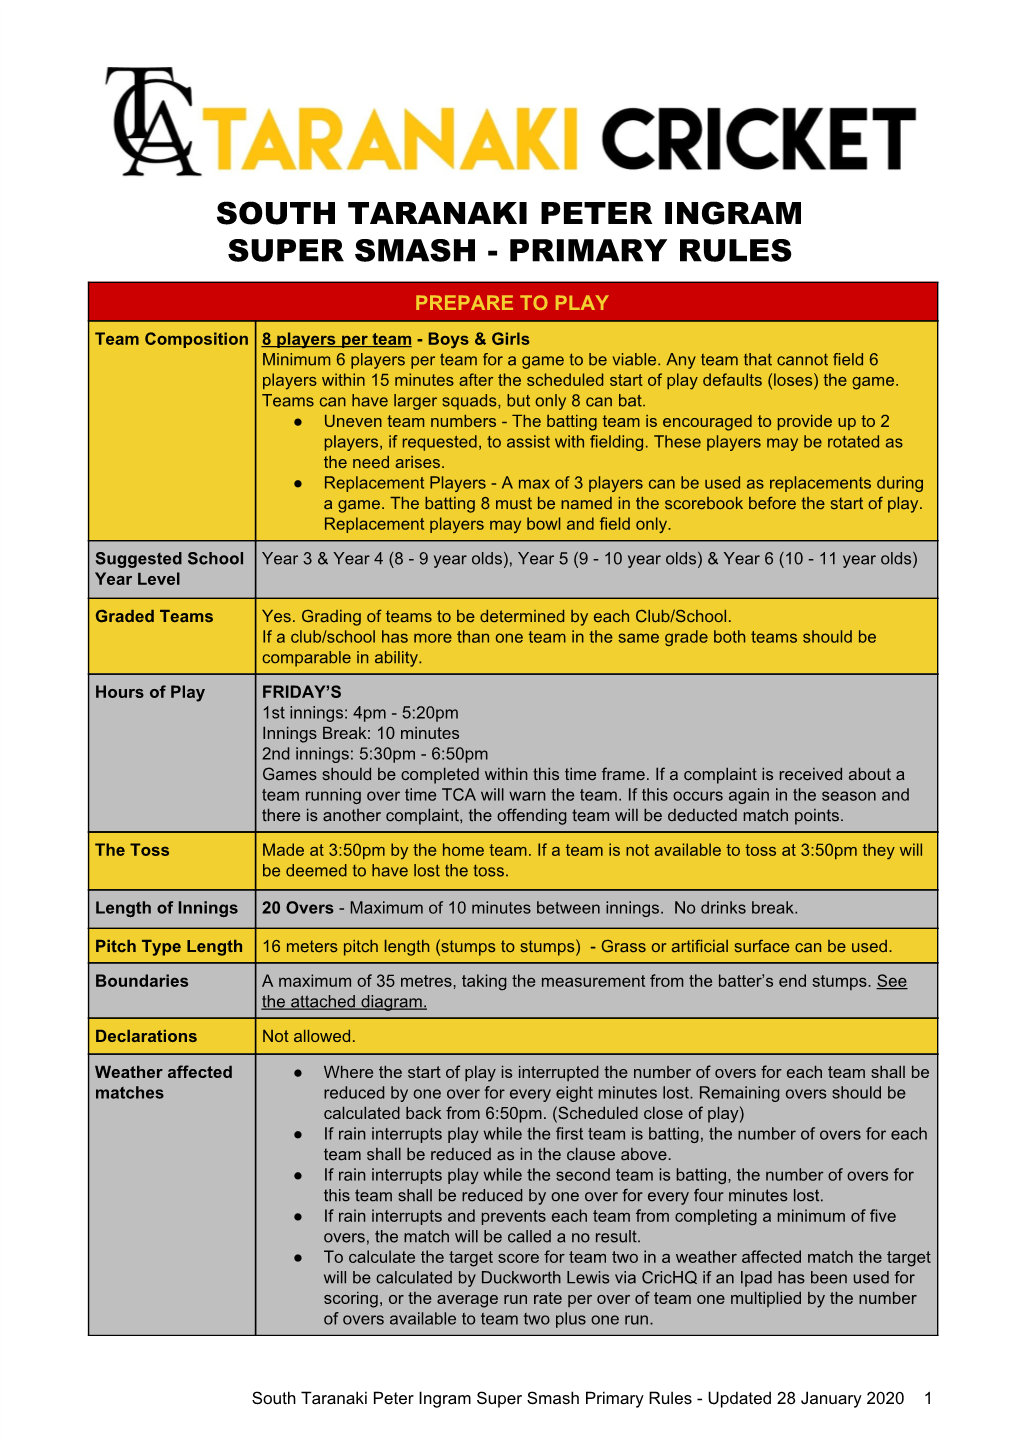 South Taranaki Peter Ingram Super Smash - Primary Rules